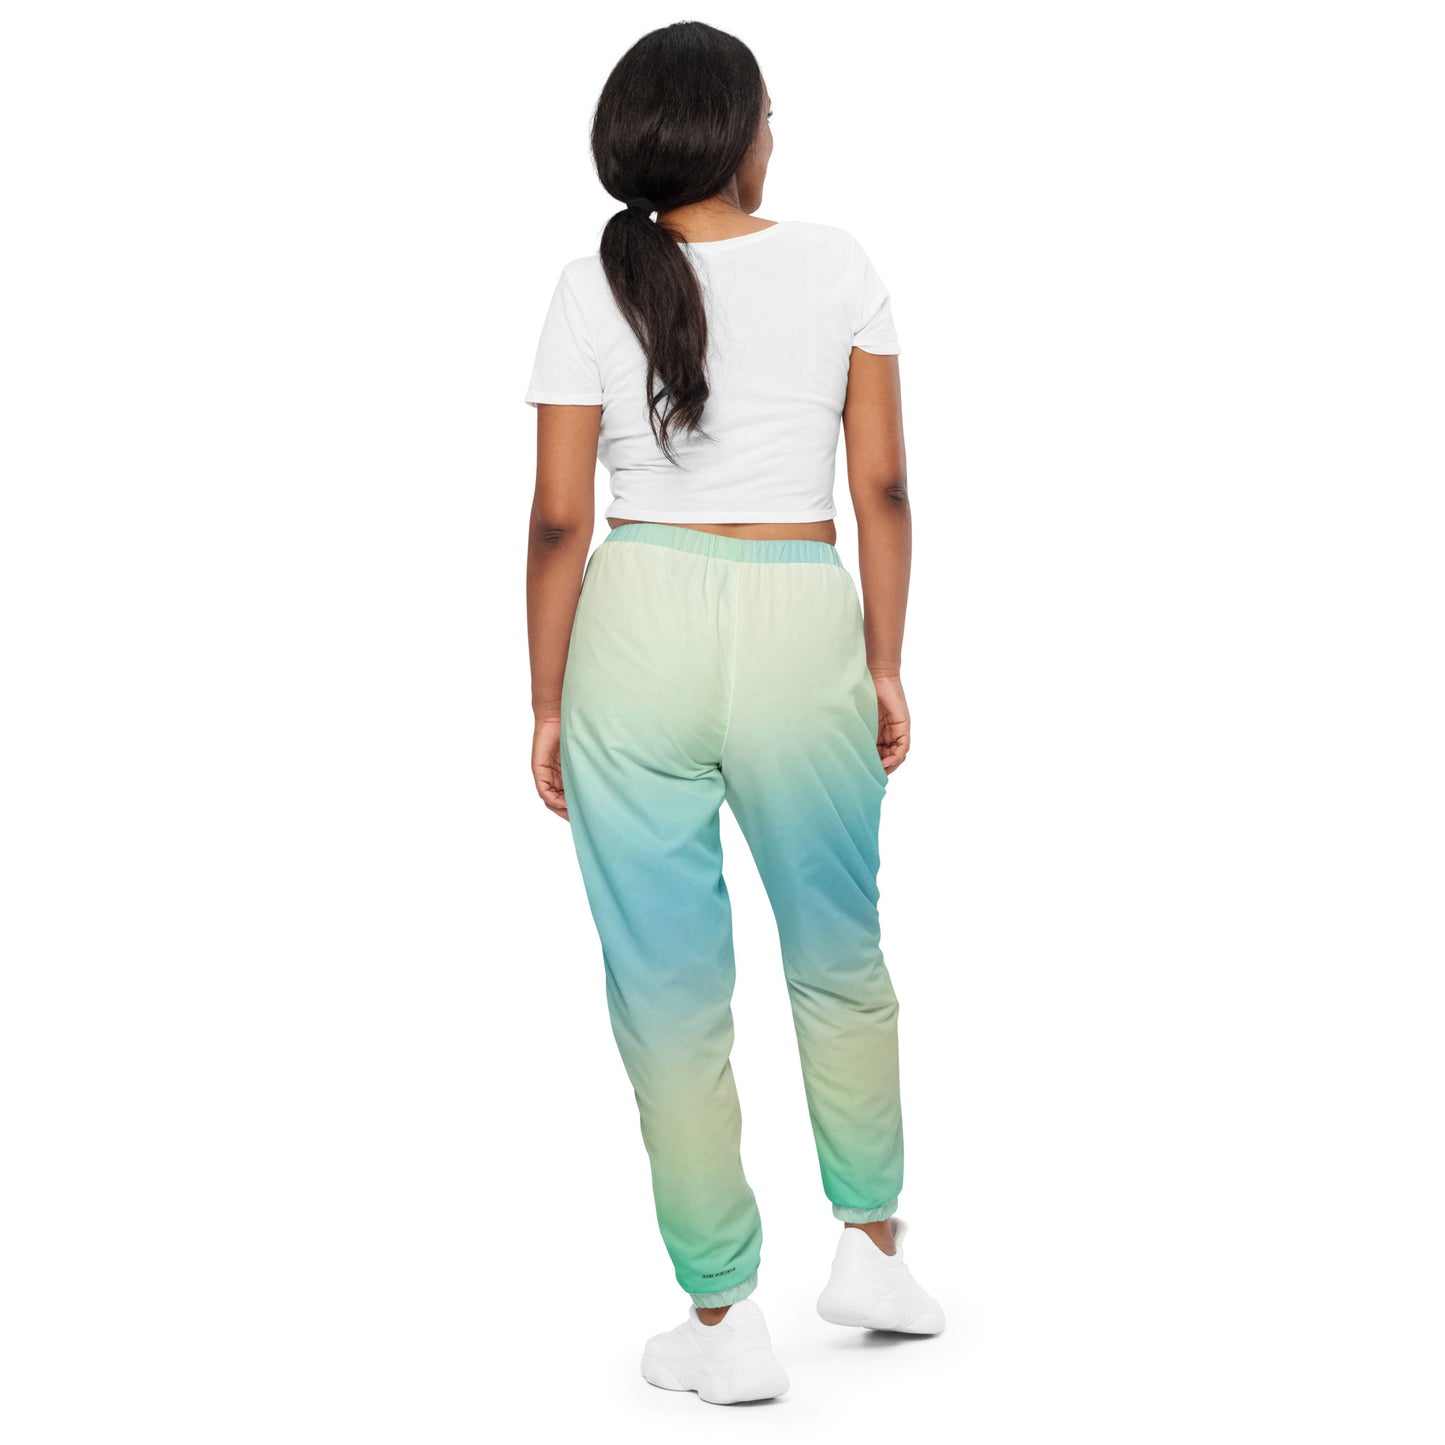 Humble Sportswear™ Women's Aero Green Track Pants